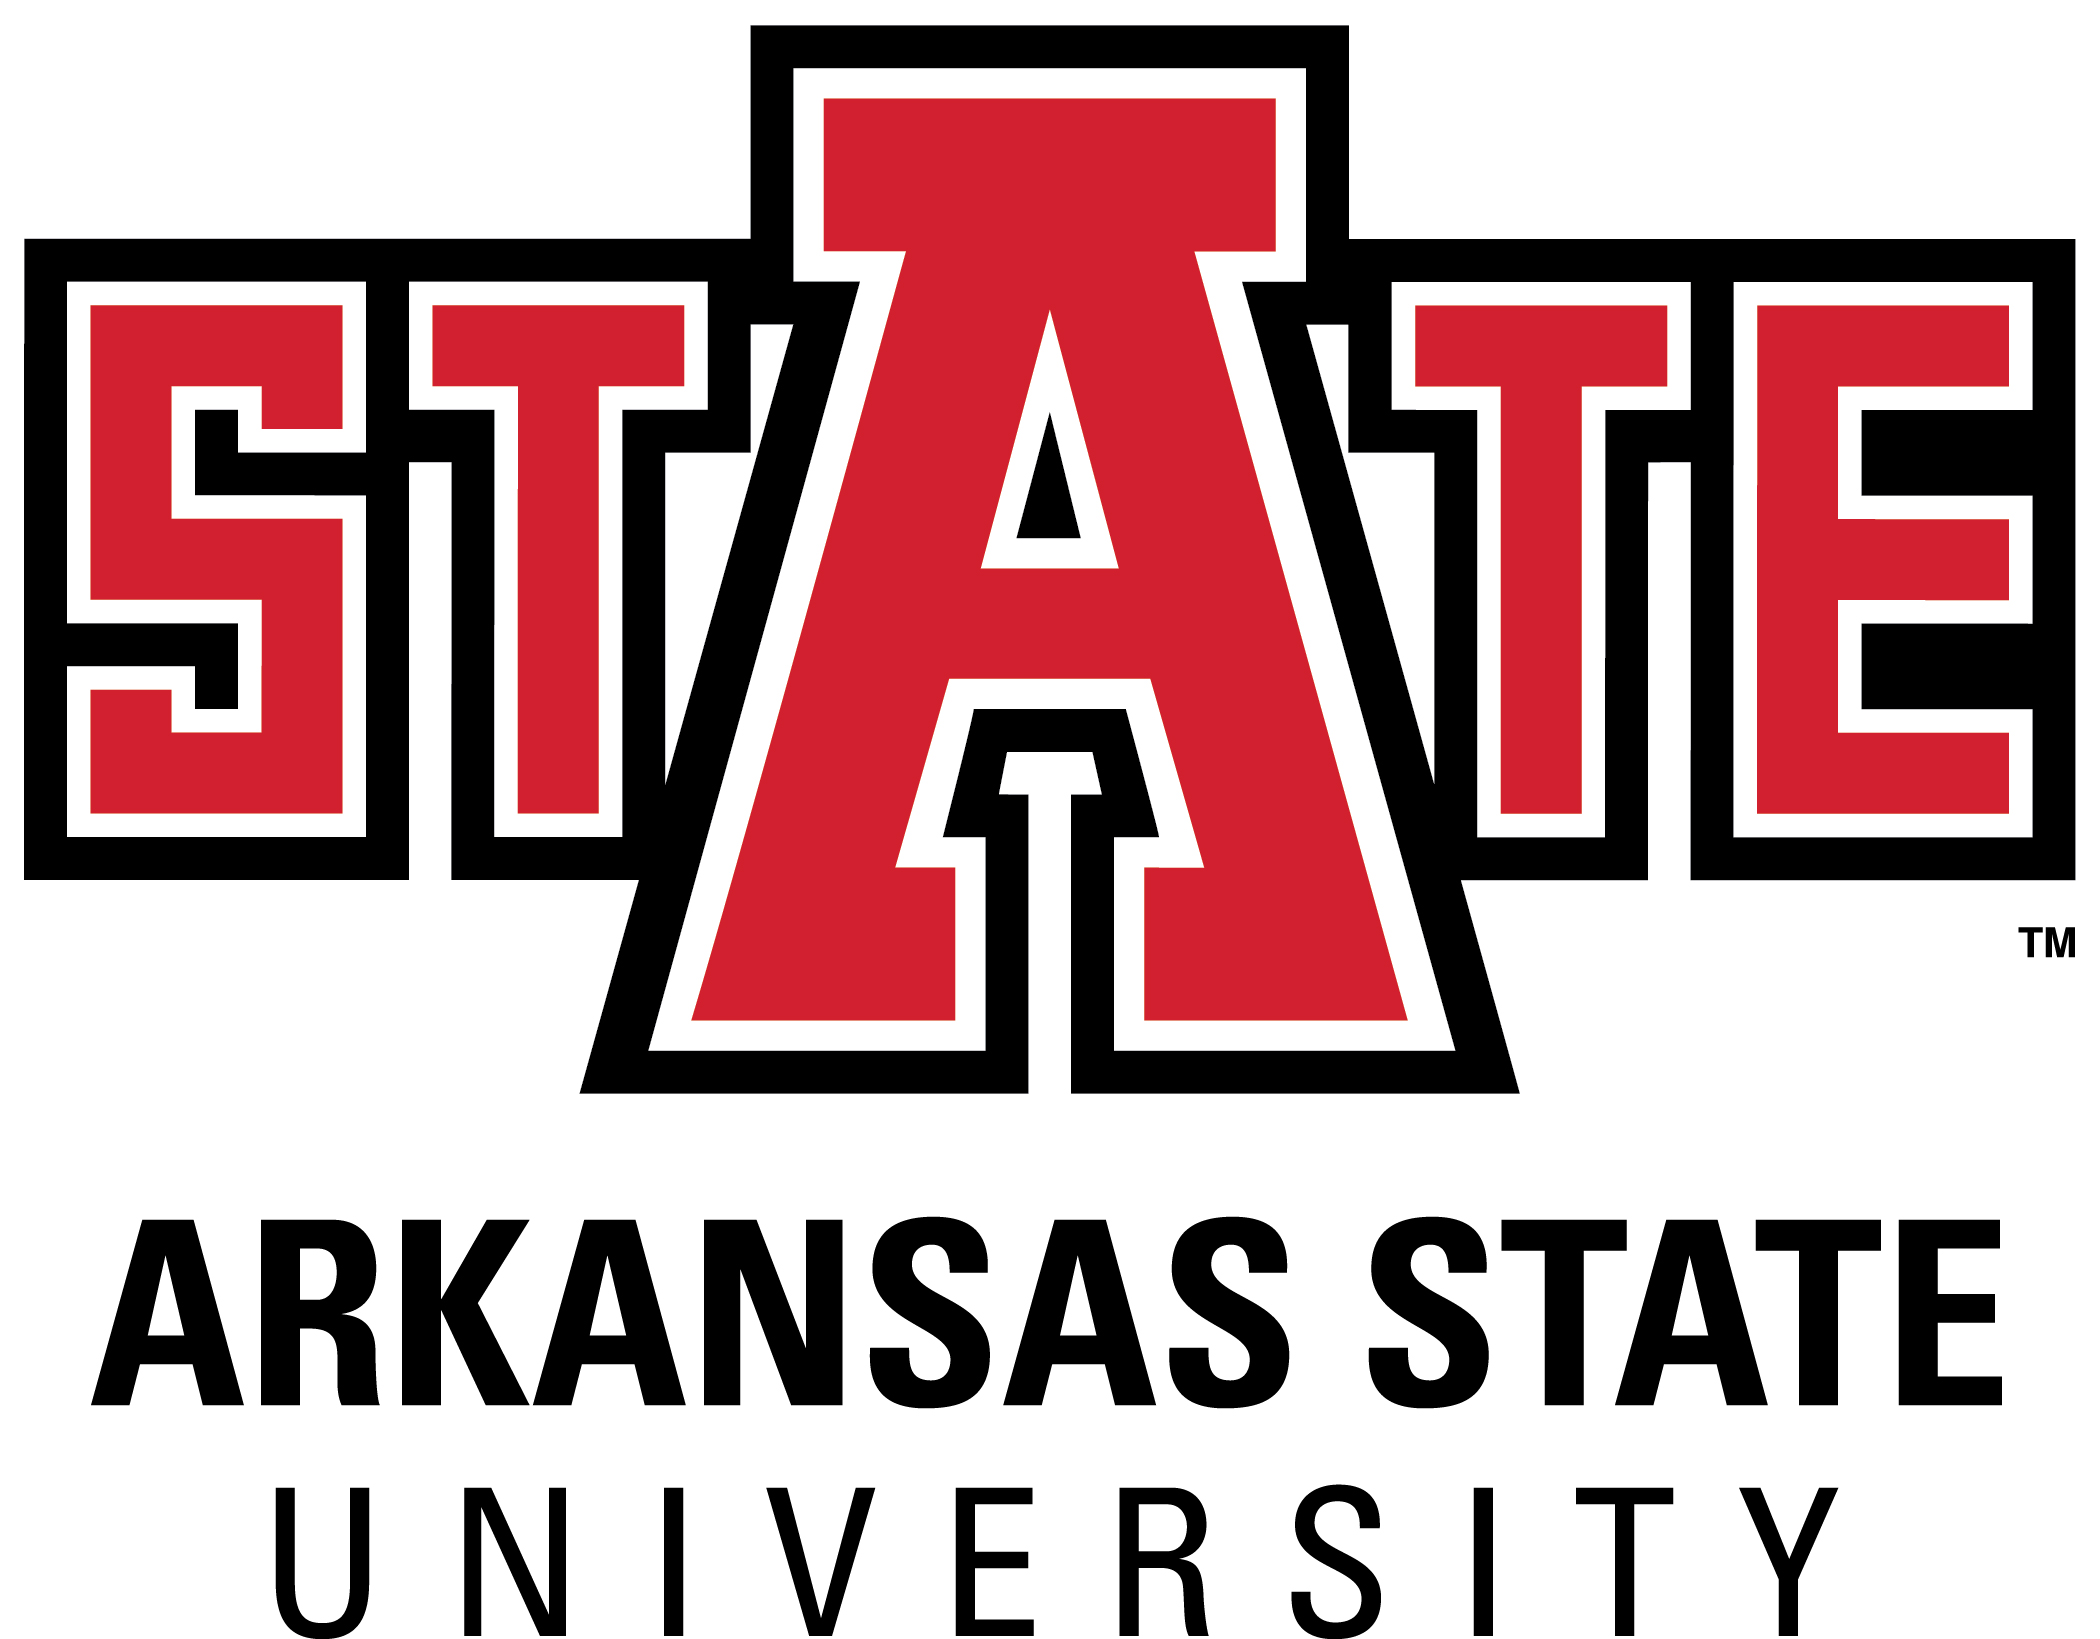 Arkansas State adopts brand identity plan, updated logos as part of